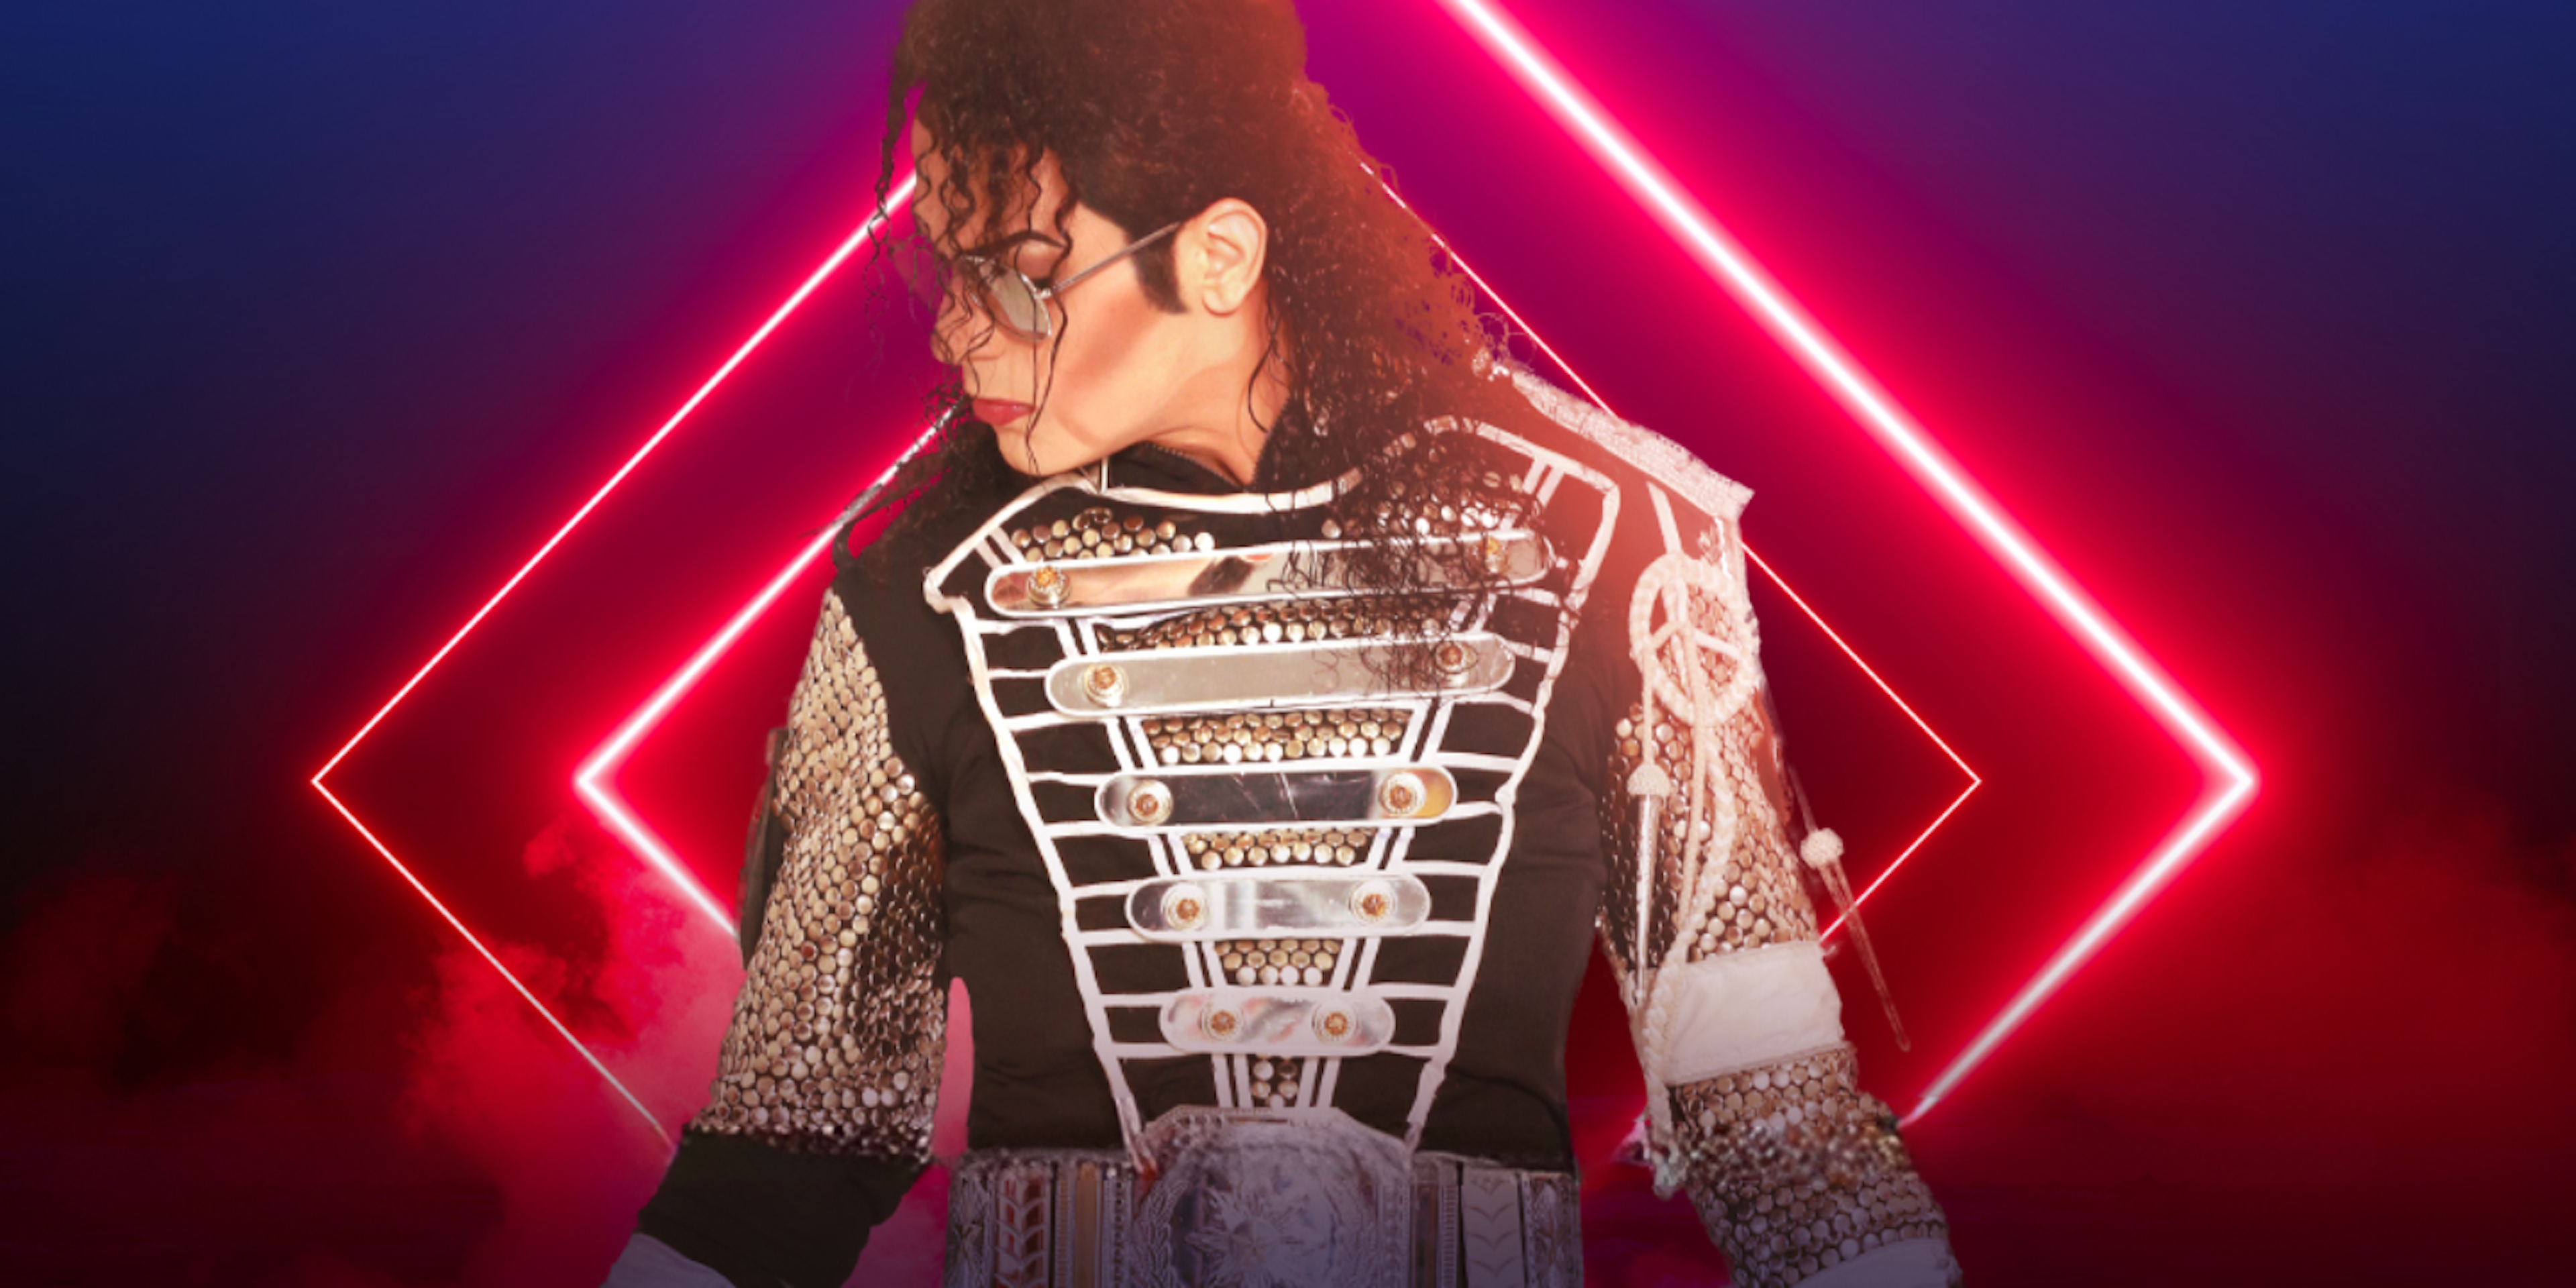 MJ Live: Michael Jackson Tribute Concert